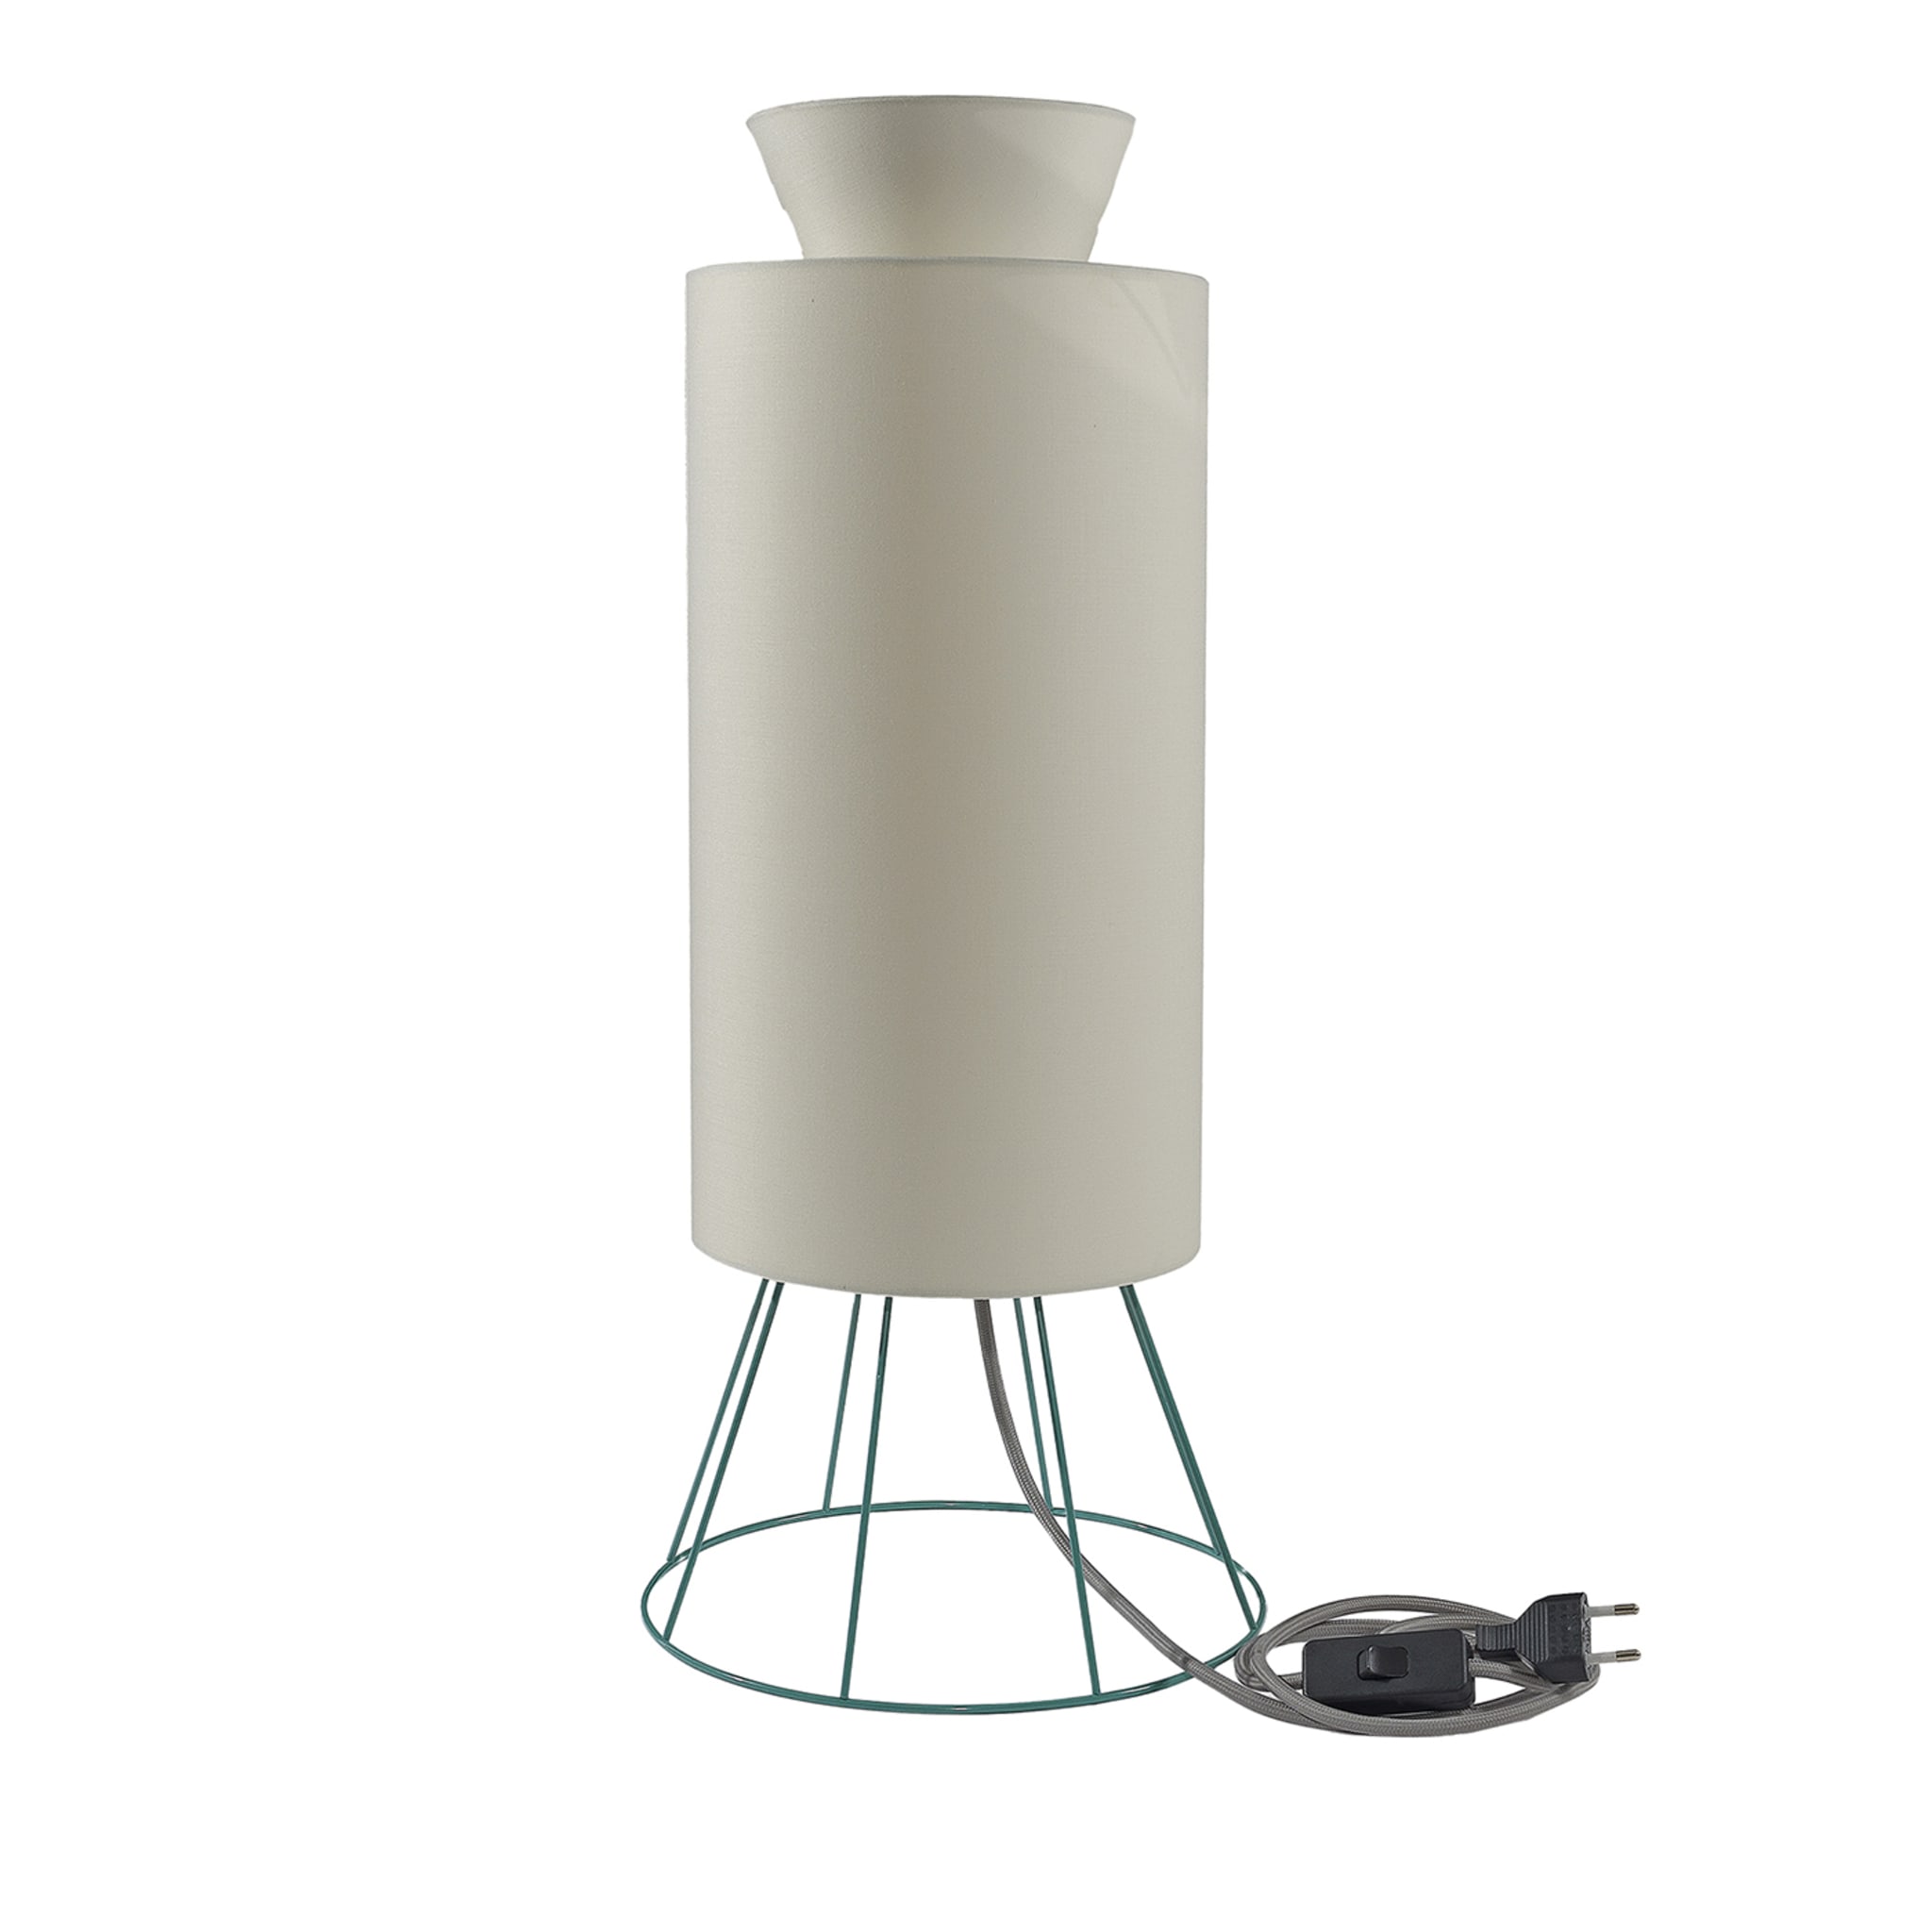 Balloon Mint-Green & White Table Lamp by Giorgia Zanellato - Alternative view 1